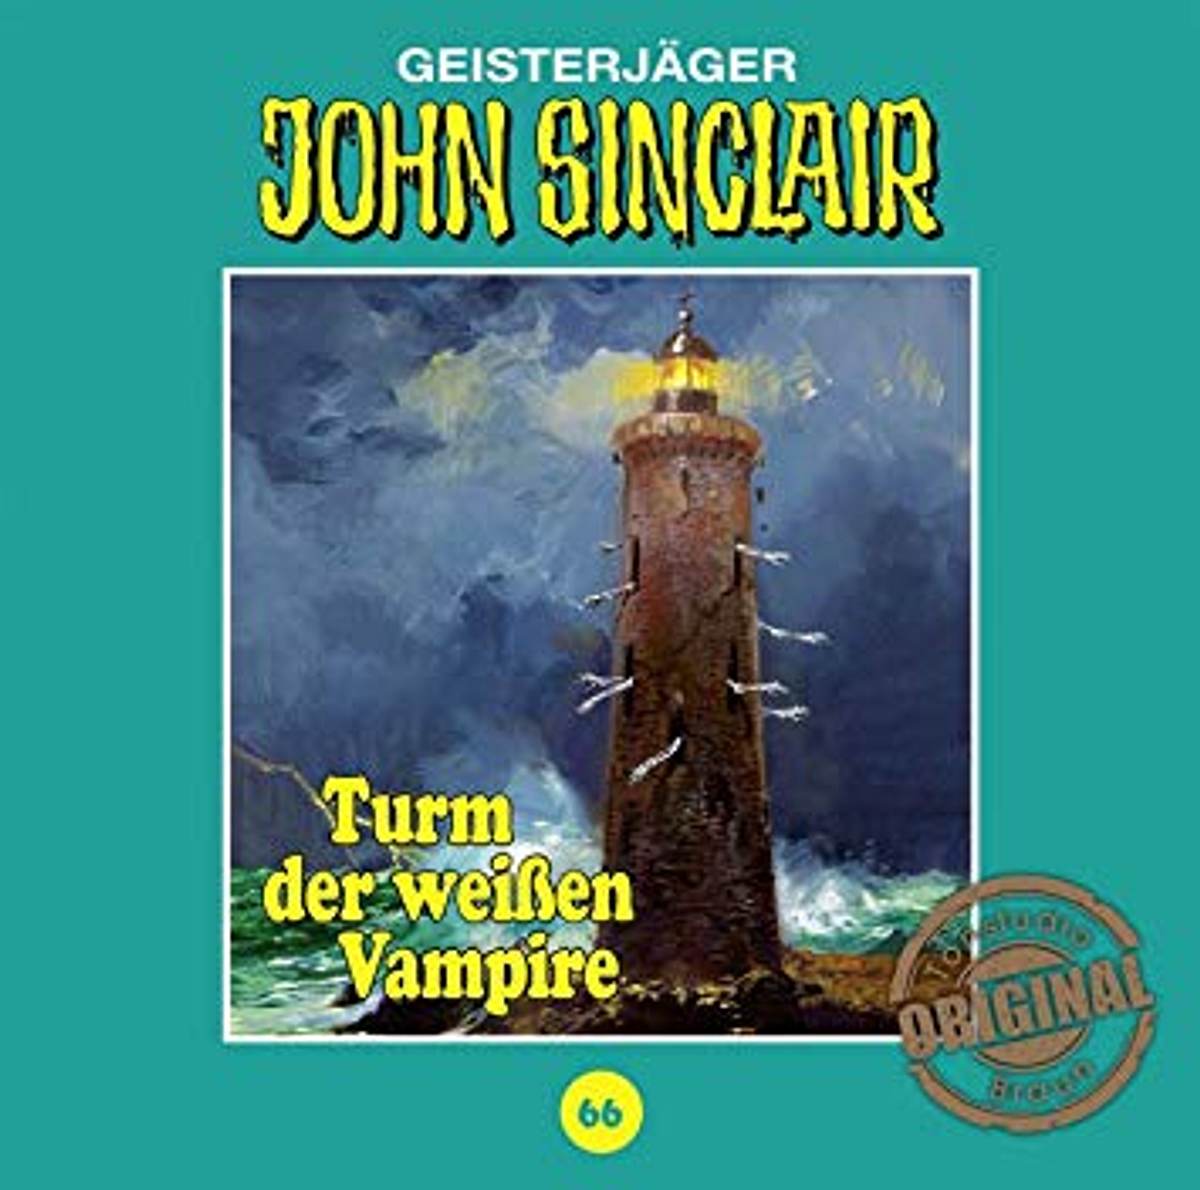 Geisterjänger John Sinclair